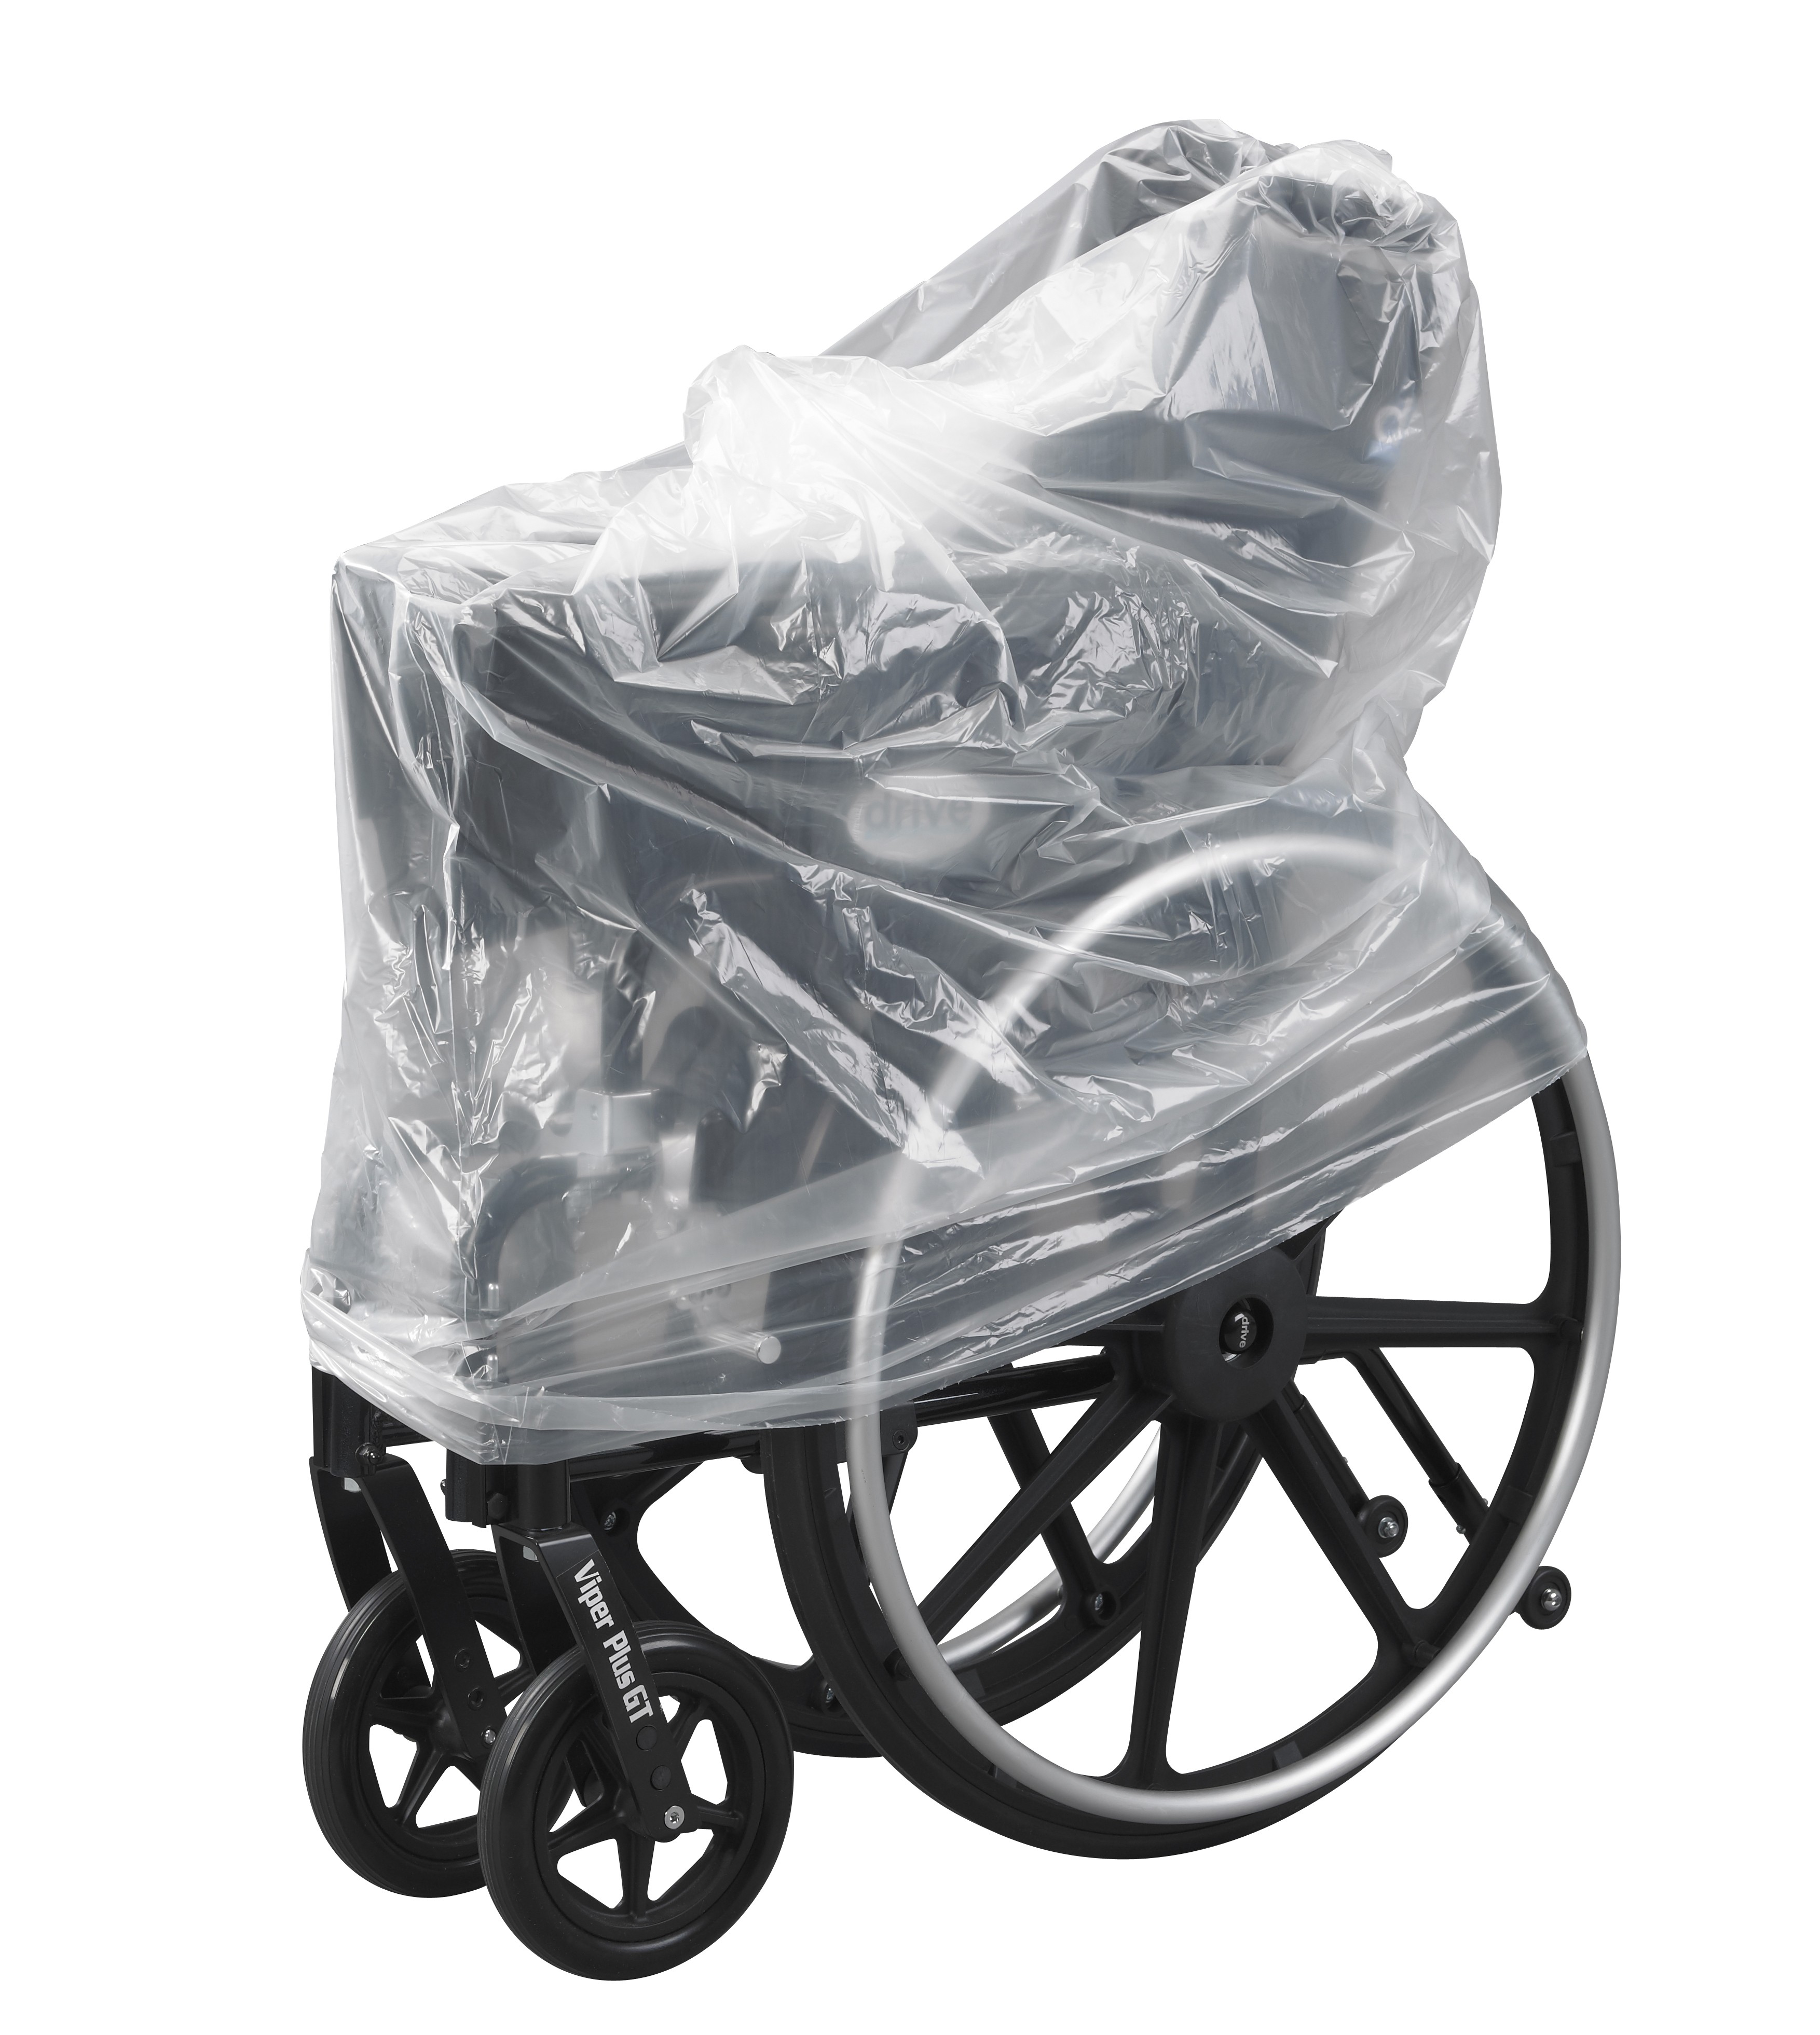 MASON MEDICAL Clear Plastic Wheelchair Storage Transport Cover Bag